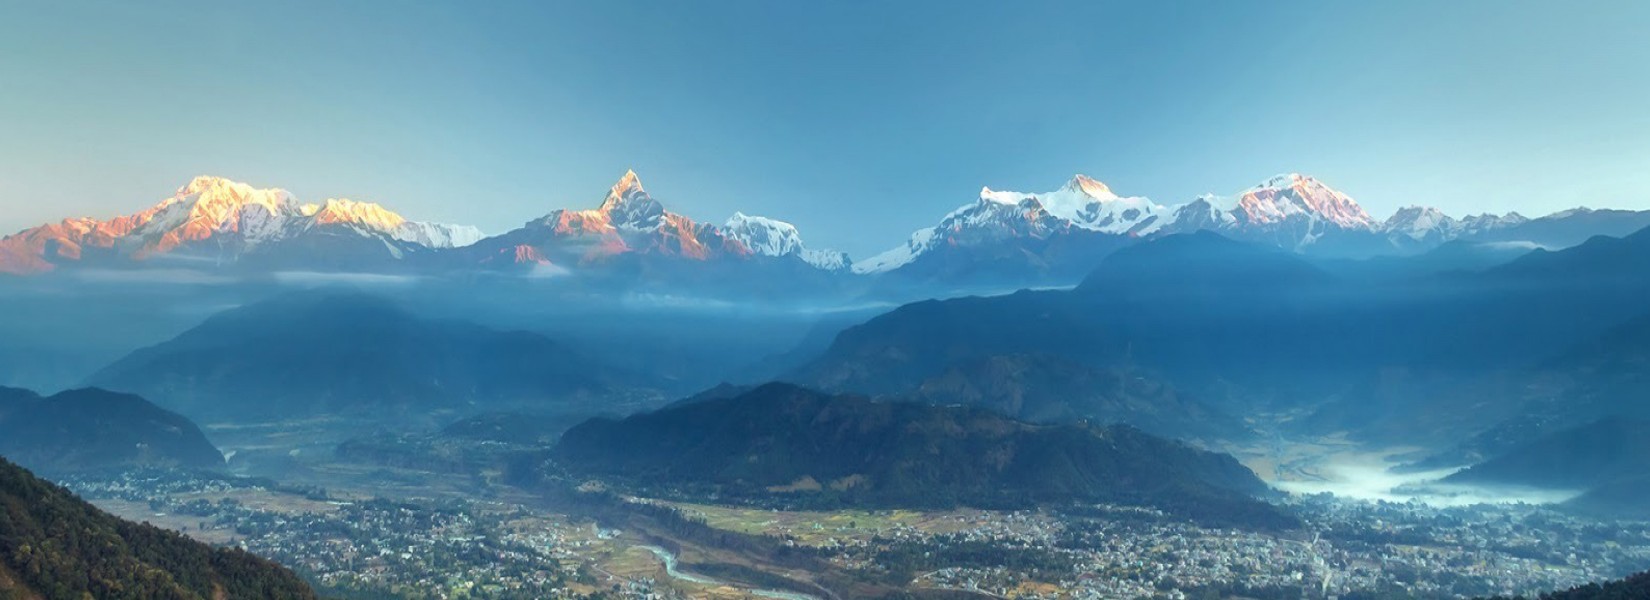 Pokhara-Lumbini tour